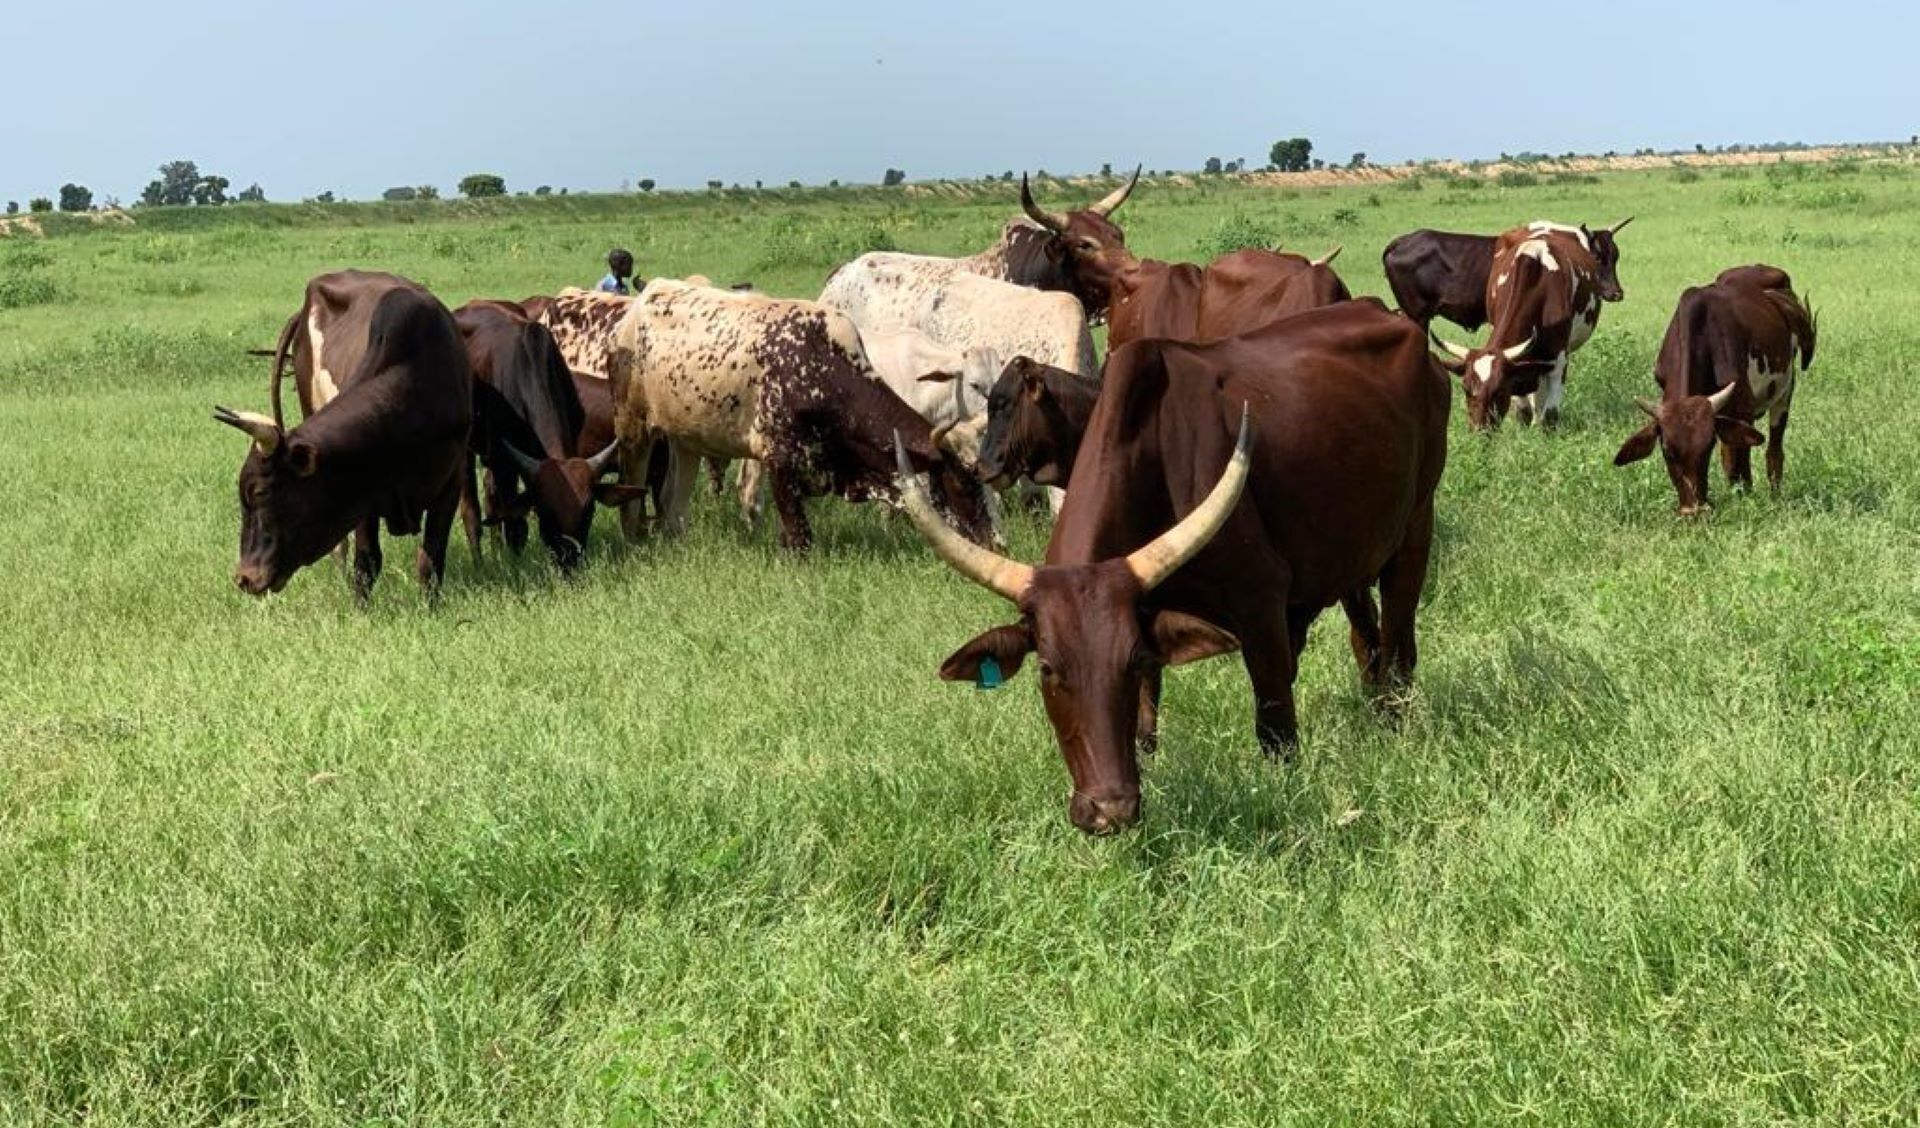 Cattle grazing on pasture in Jere, Borno State, Nigeria © D. Jidda